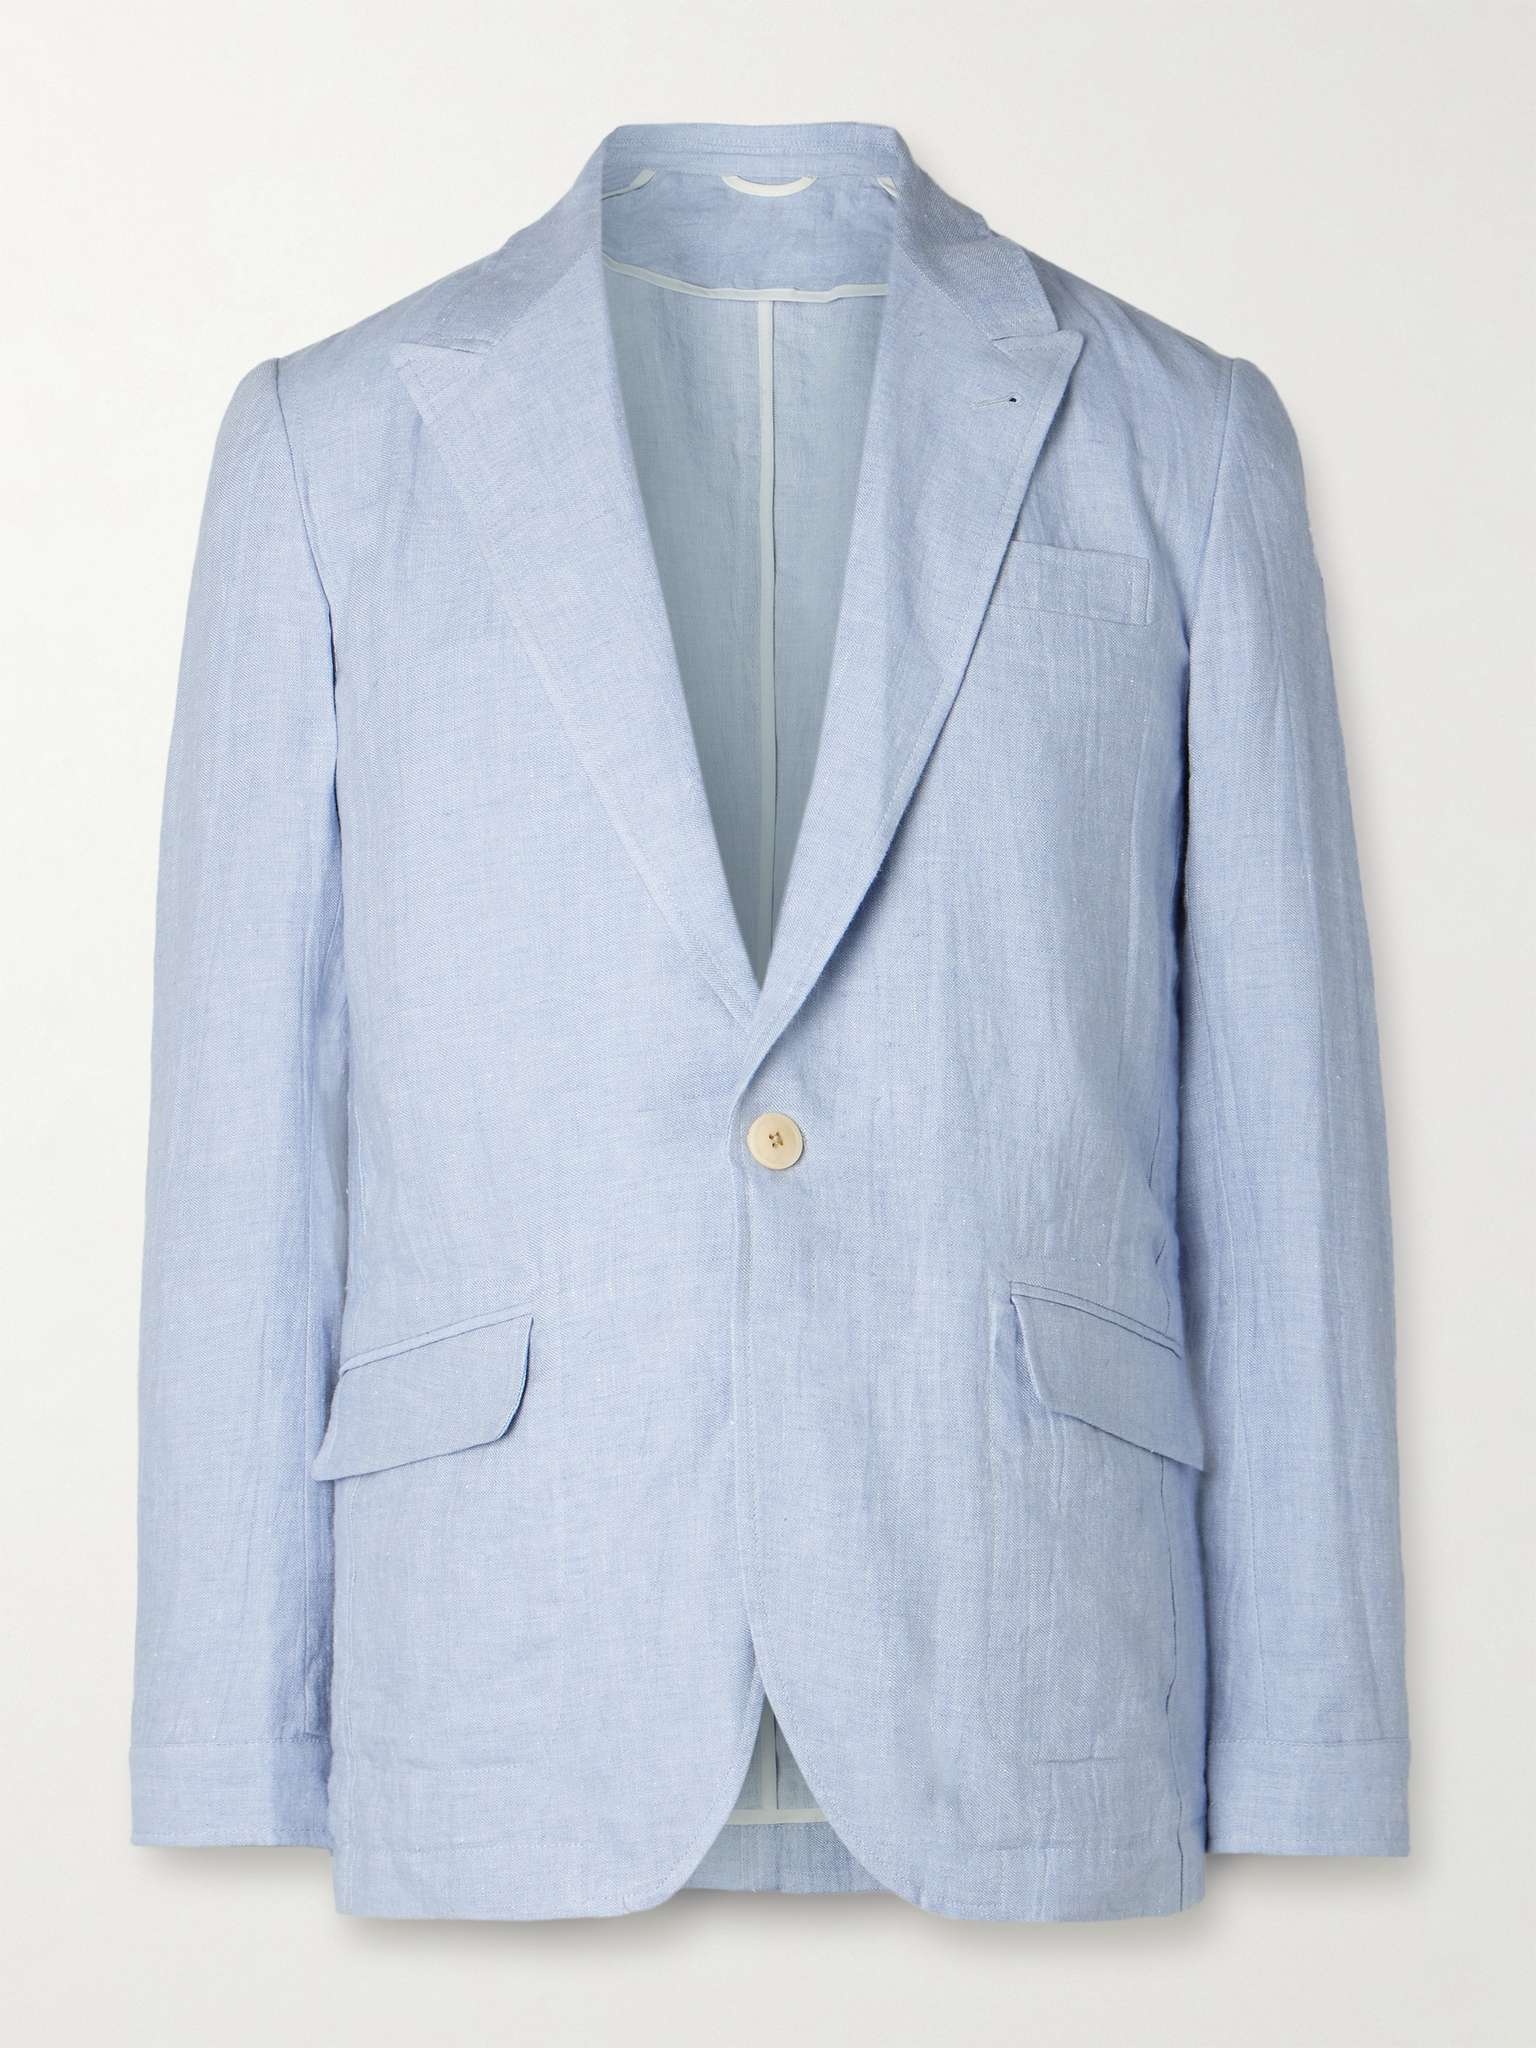 Wyndhams Unstructured Linen Suit Jacket - 1